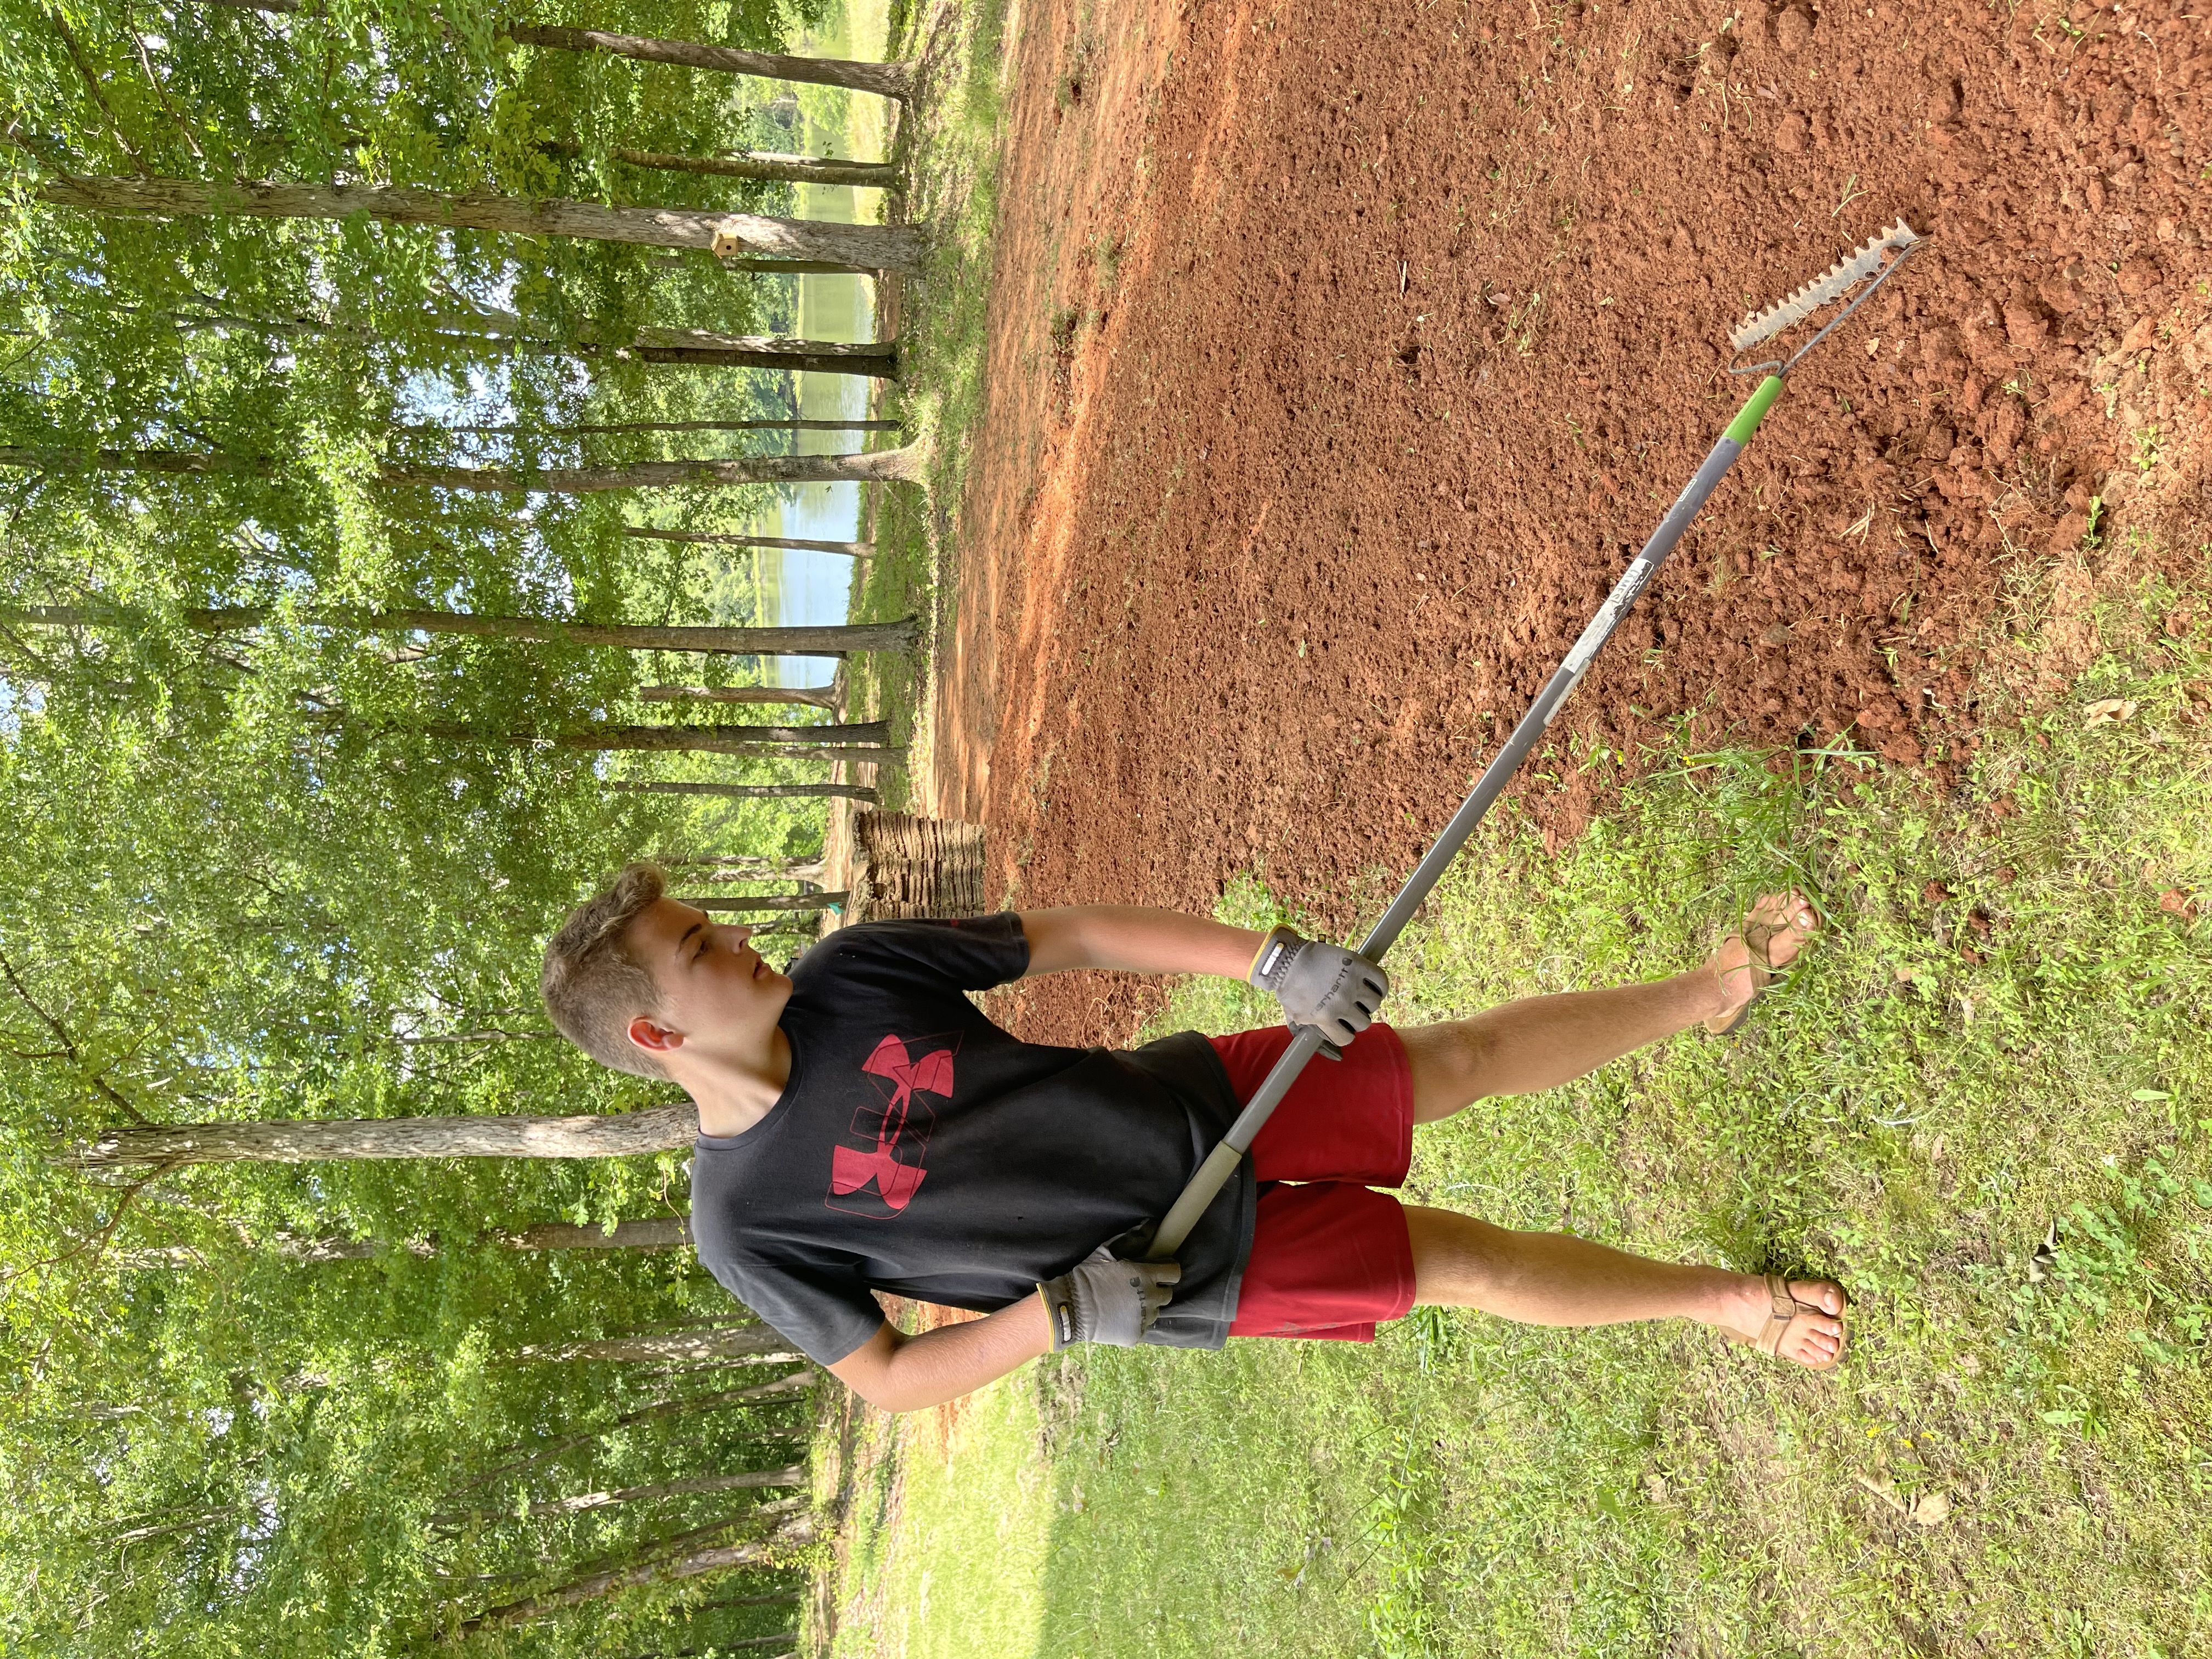 boy raking the dirt